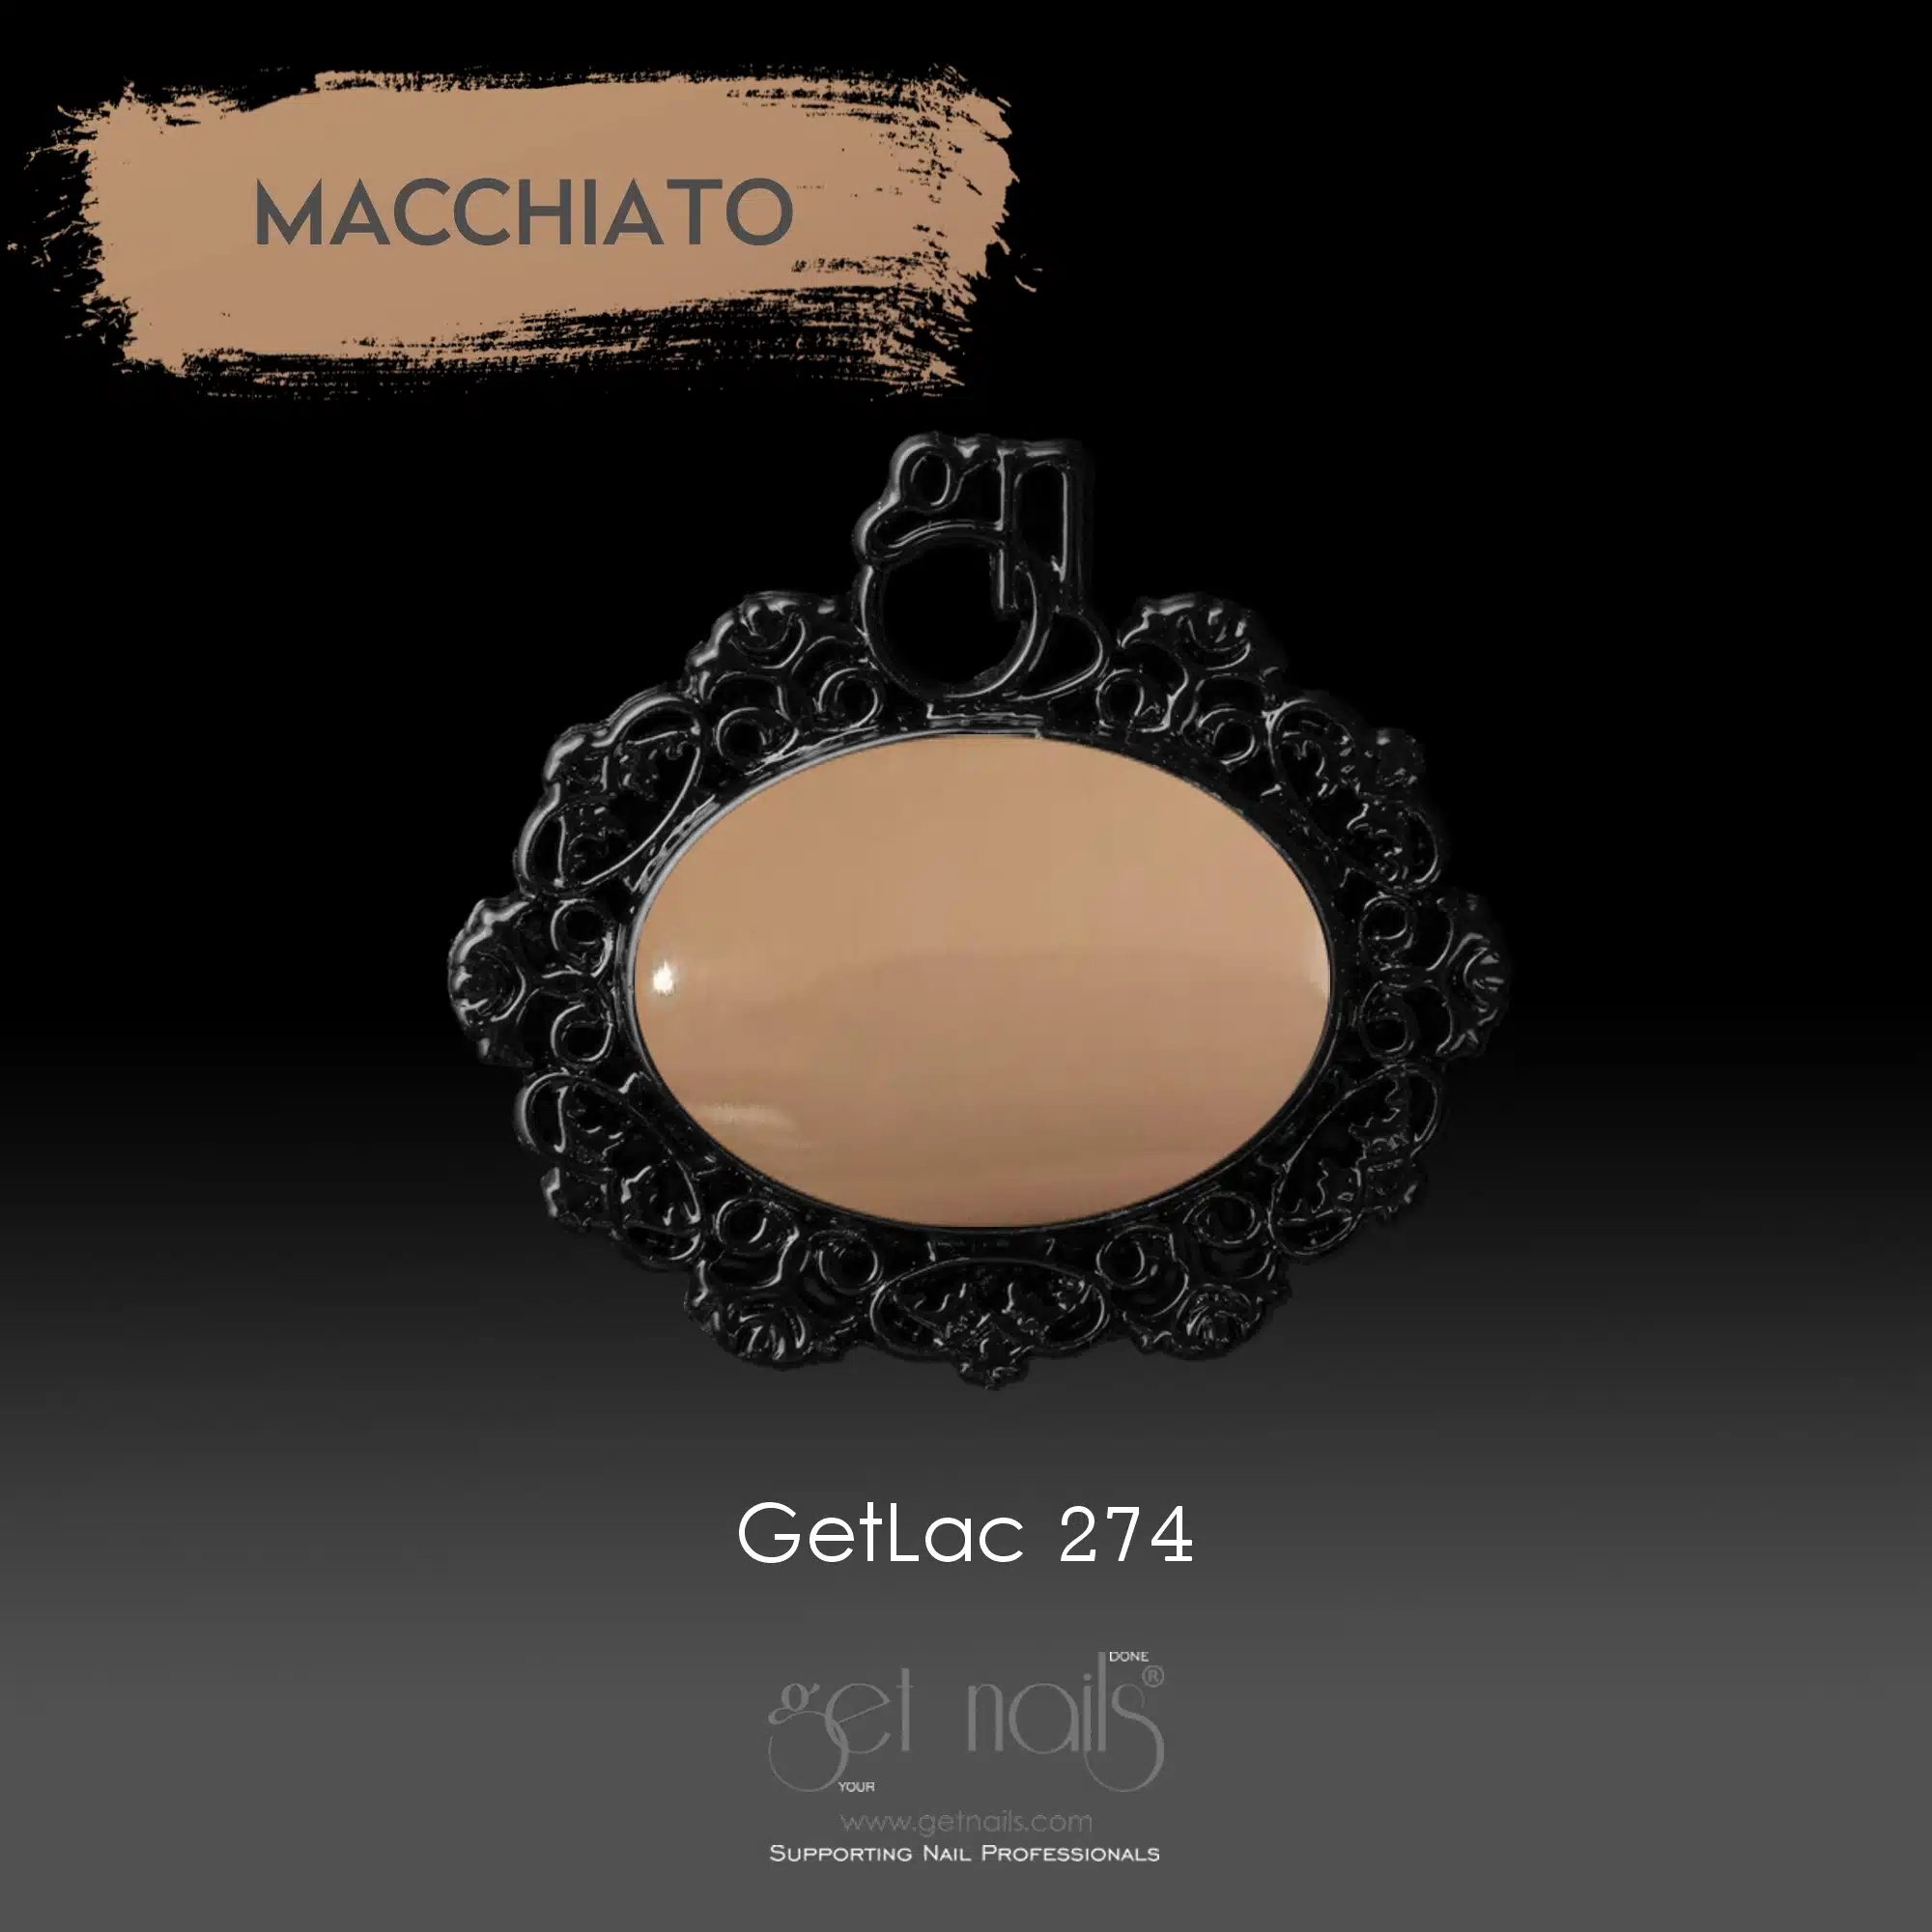 Get Nails Austria - GetLac 274 15g Macchiato